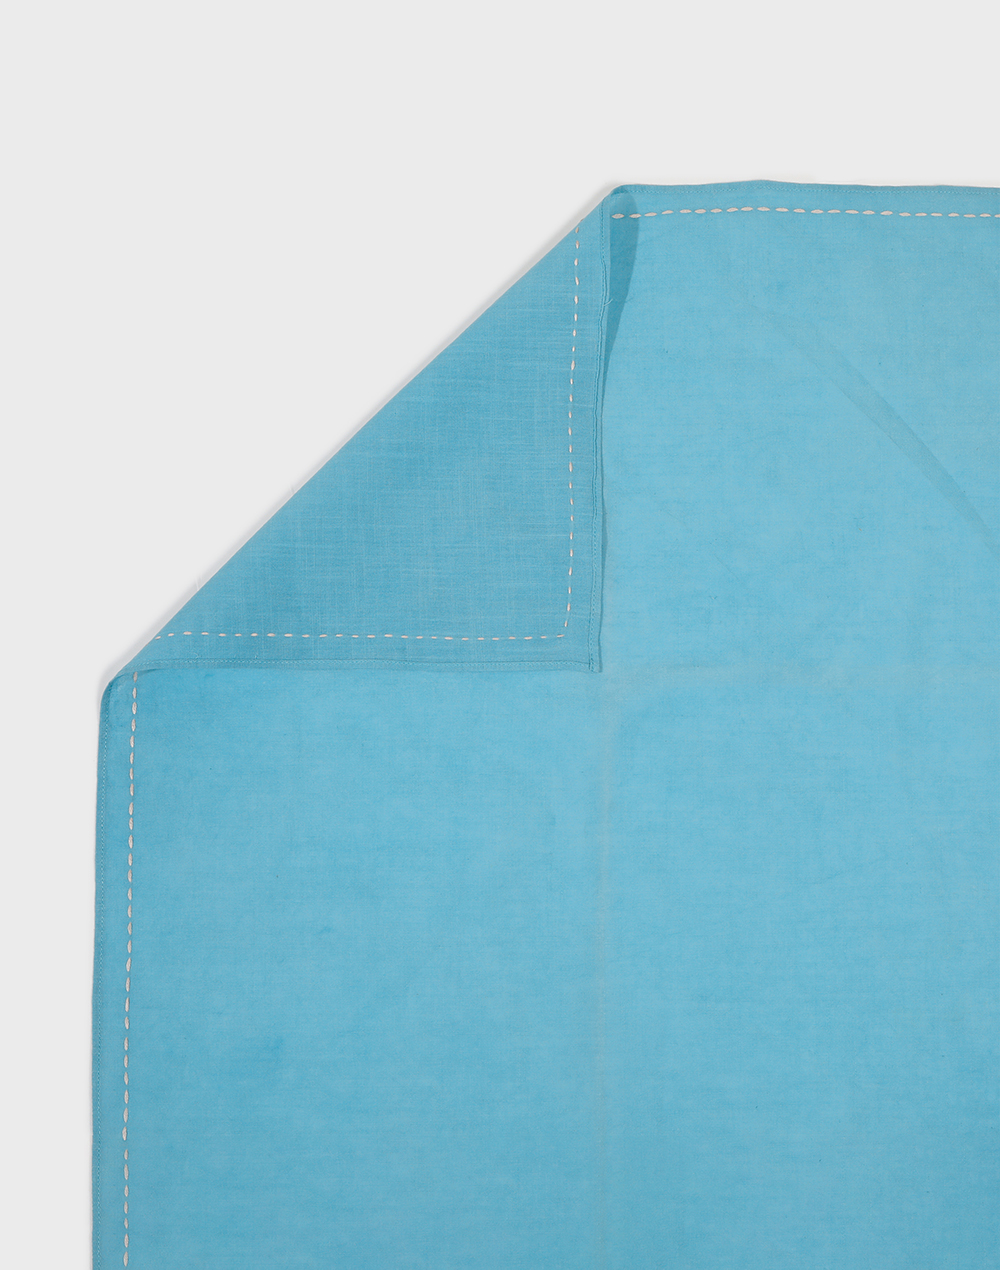 Blue Advika Cotton Embroidered Napkin Set Of 6